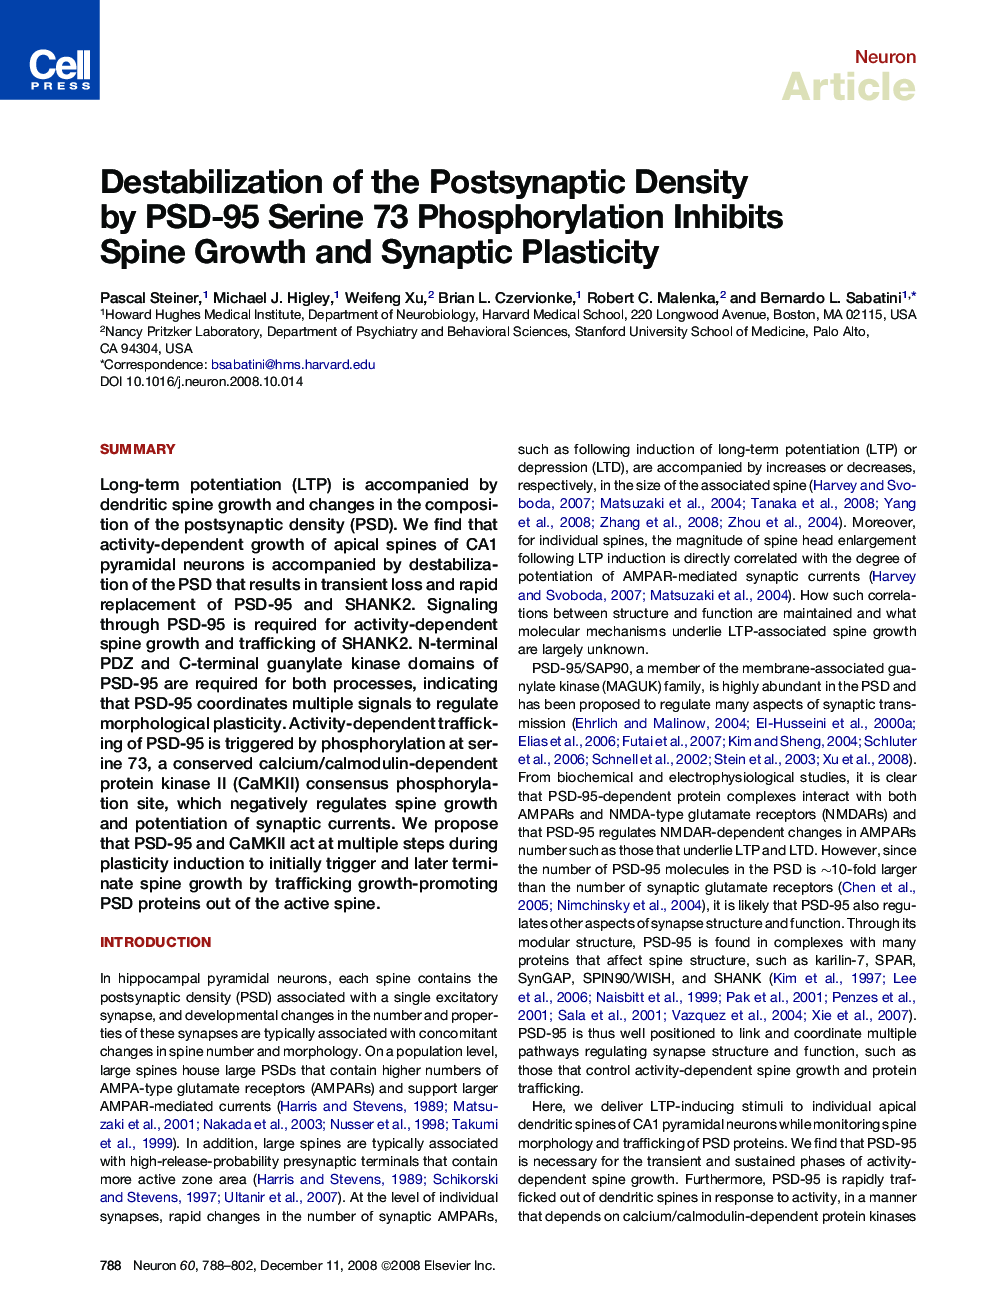 Destabilization of the Postsynaptic Density by PSD-95 Serine 73 Phosphorylation Inhibits Spine Growth and Synaptic Plasticity